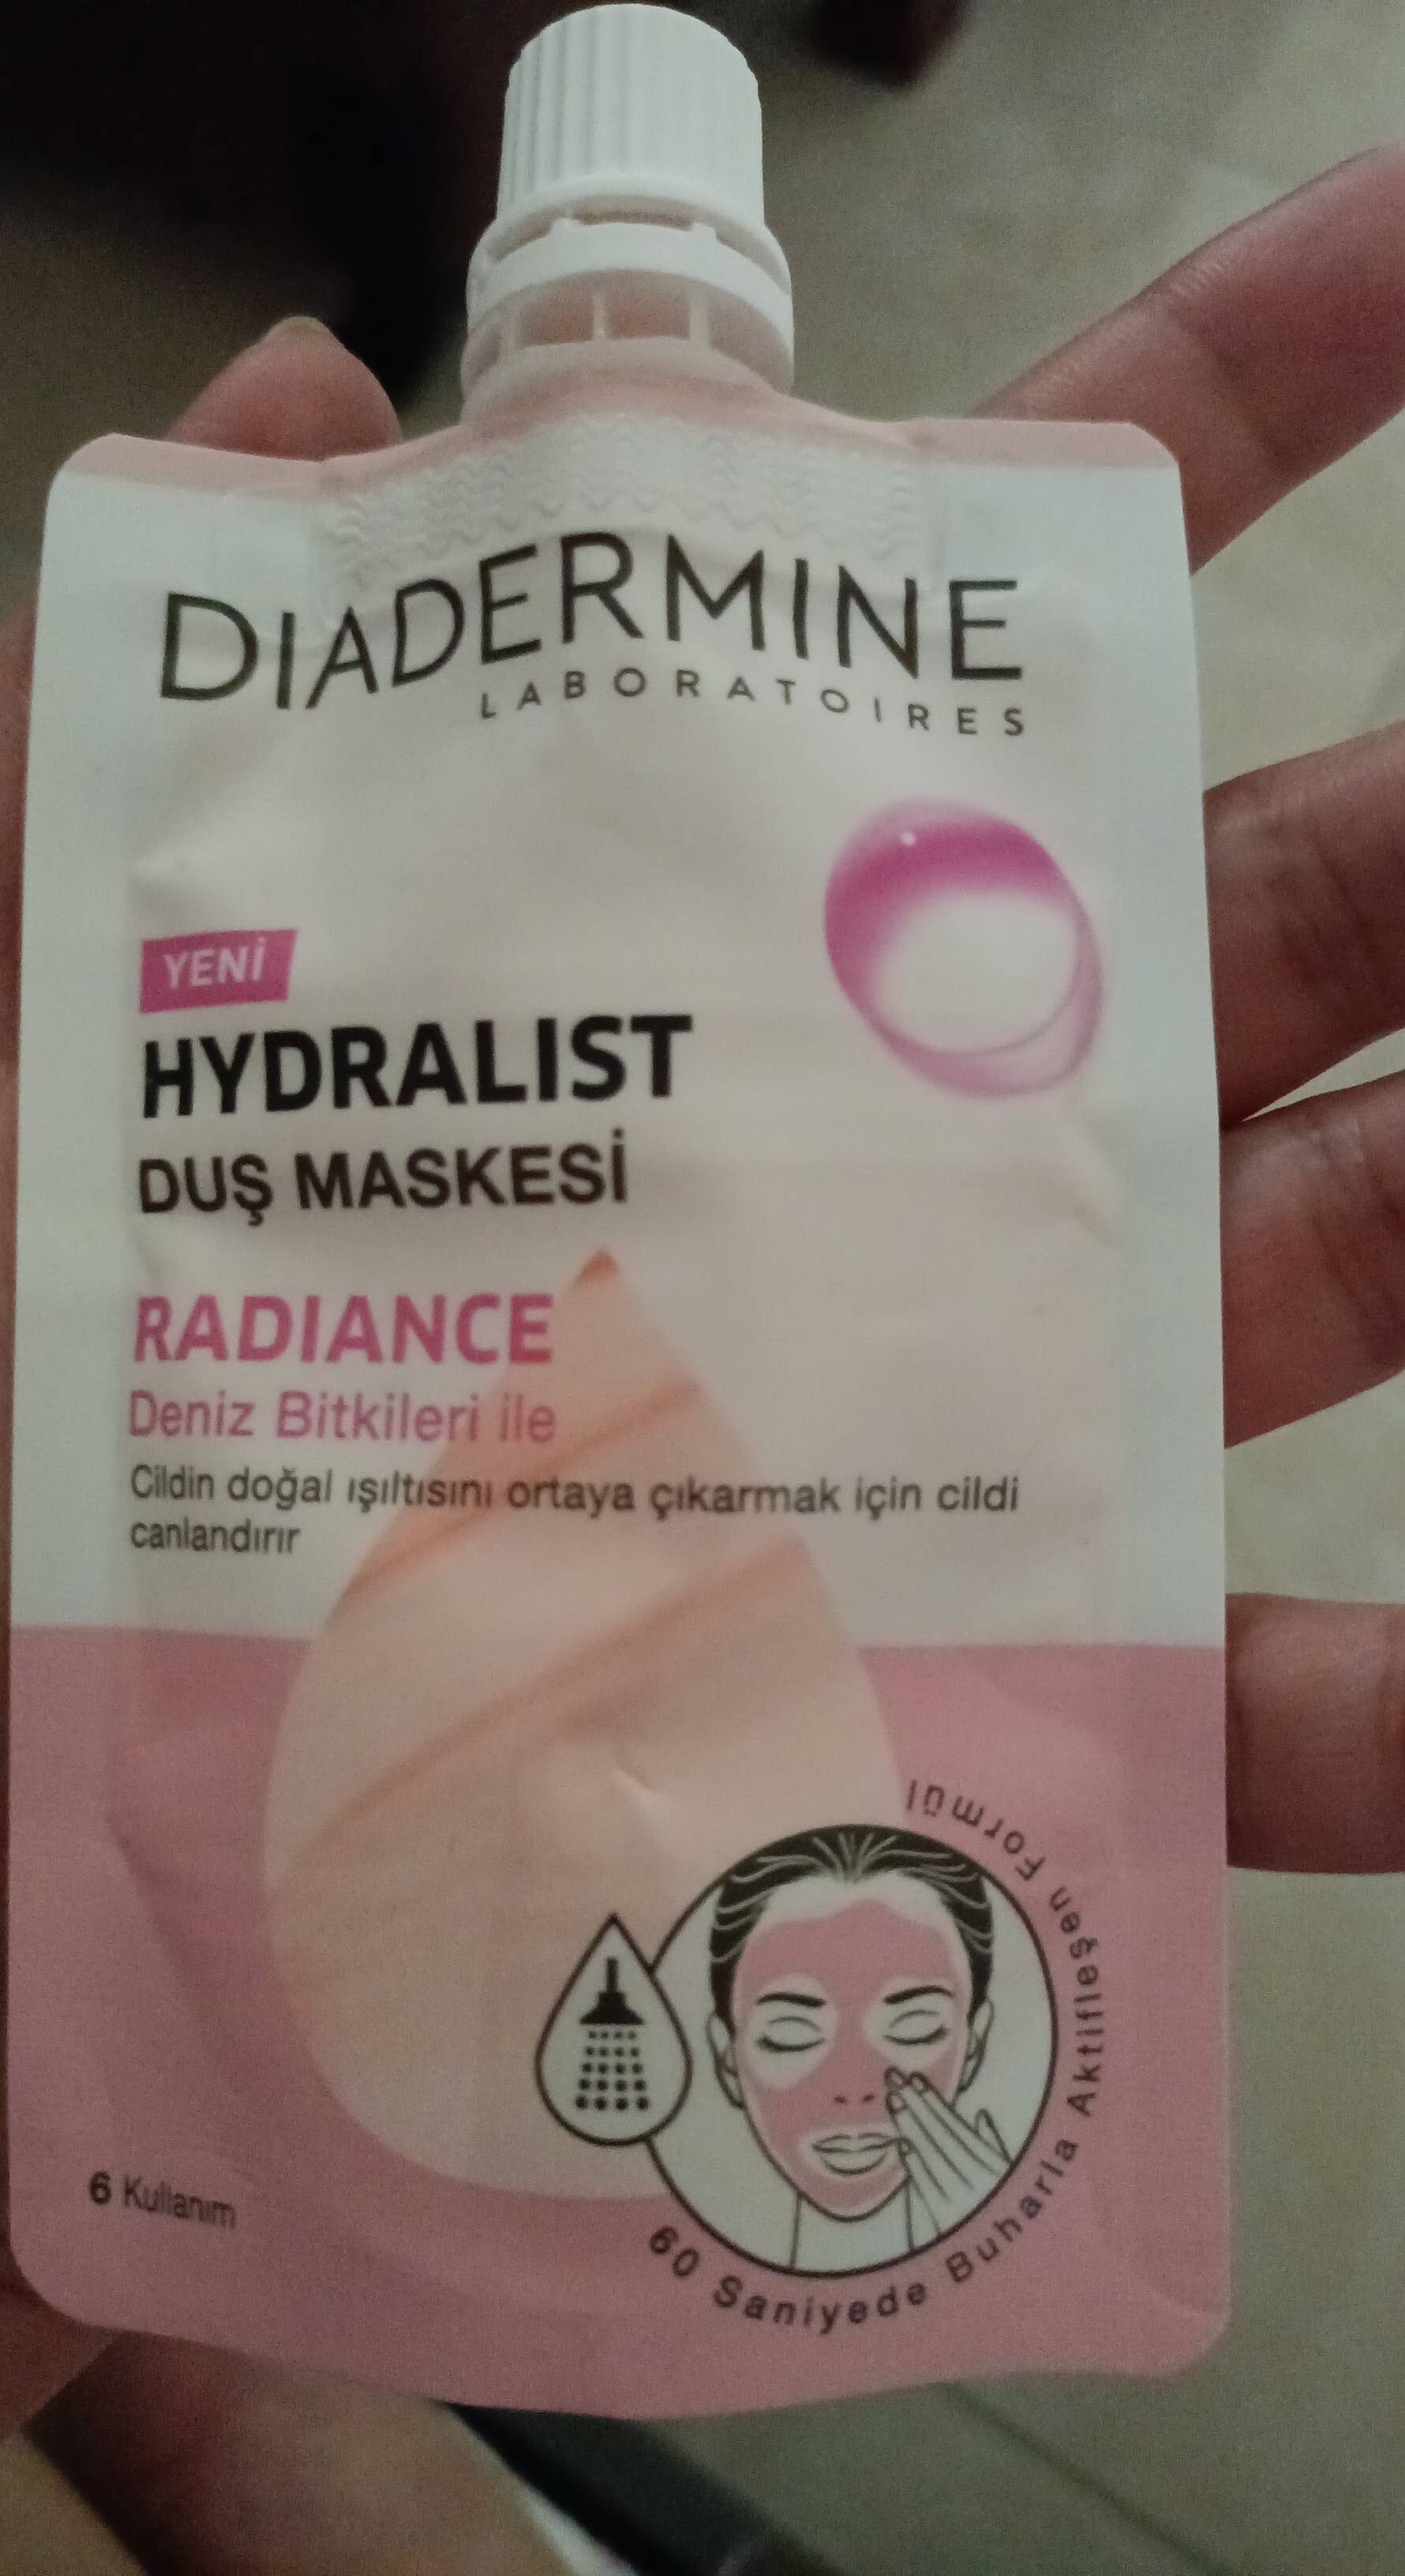 Diadermine - Produkt - en